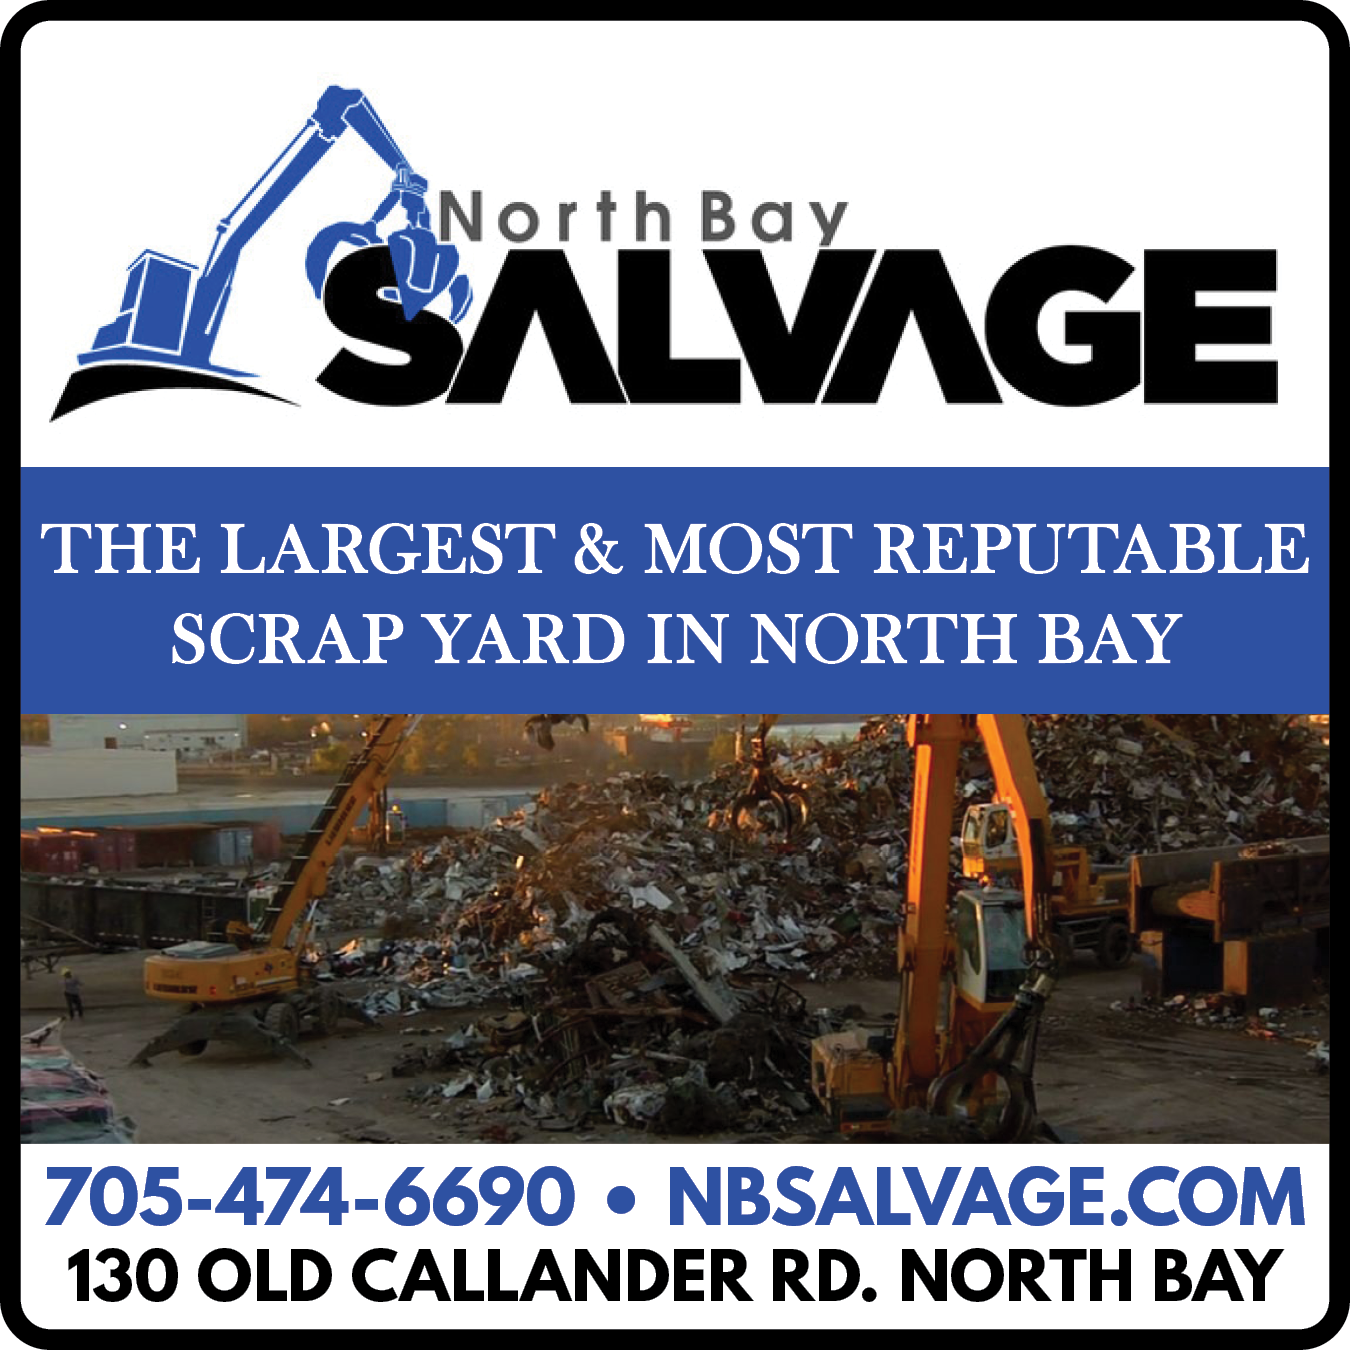 North Bay Salvage